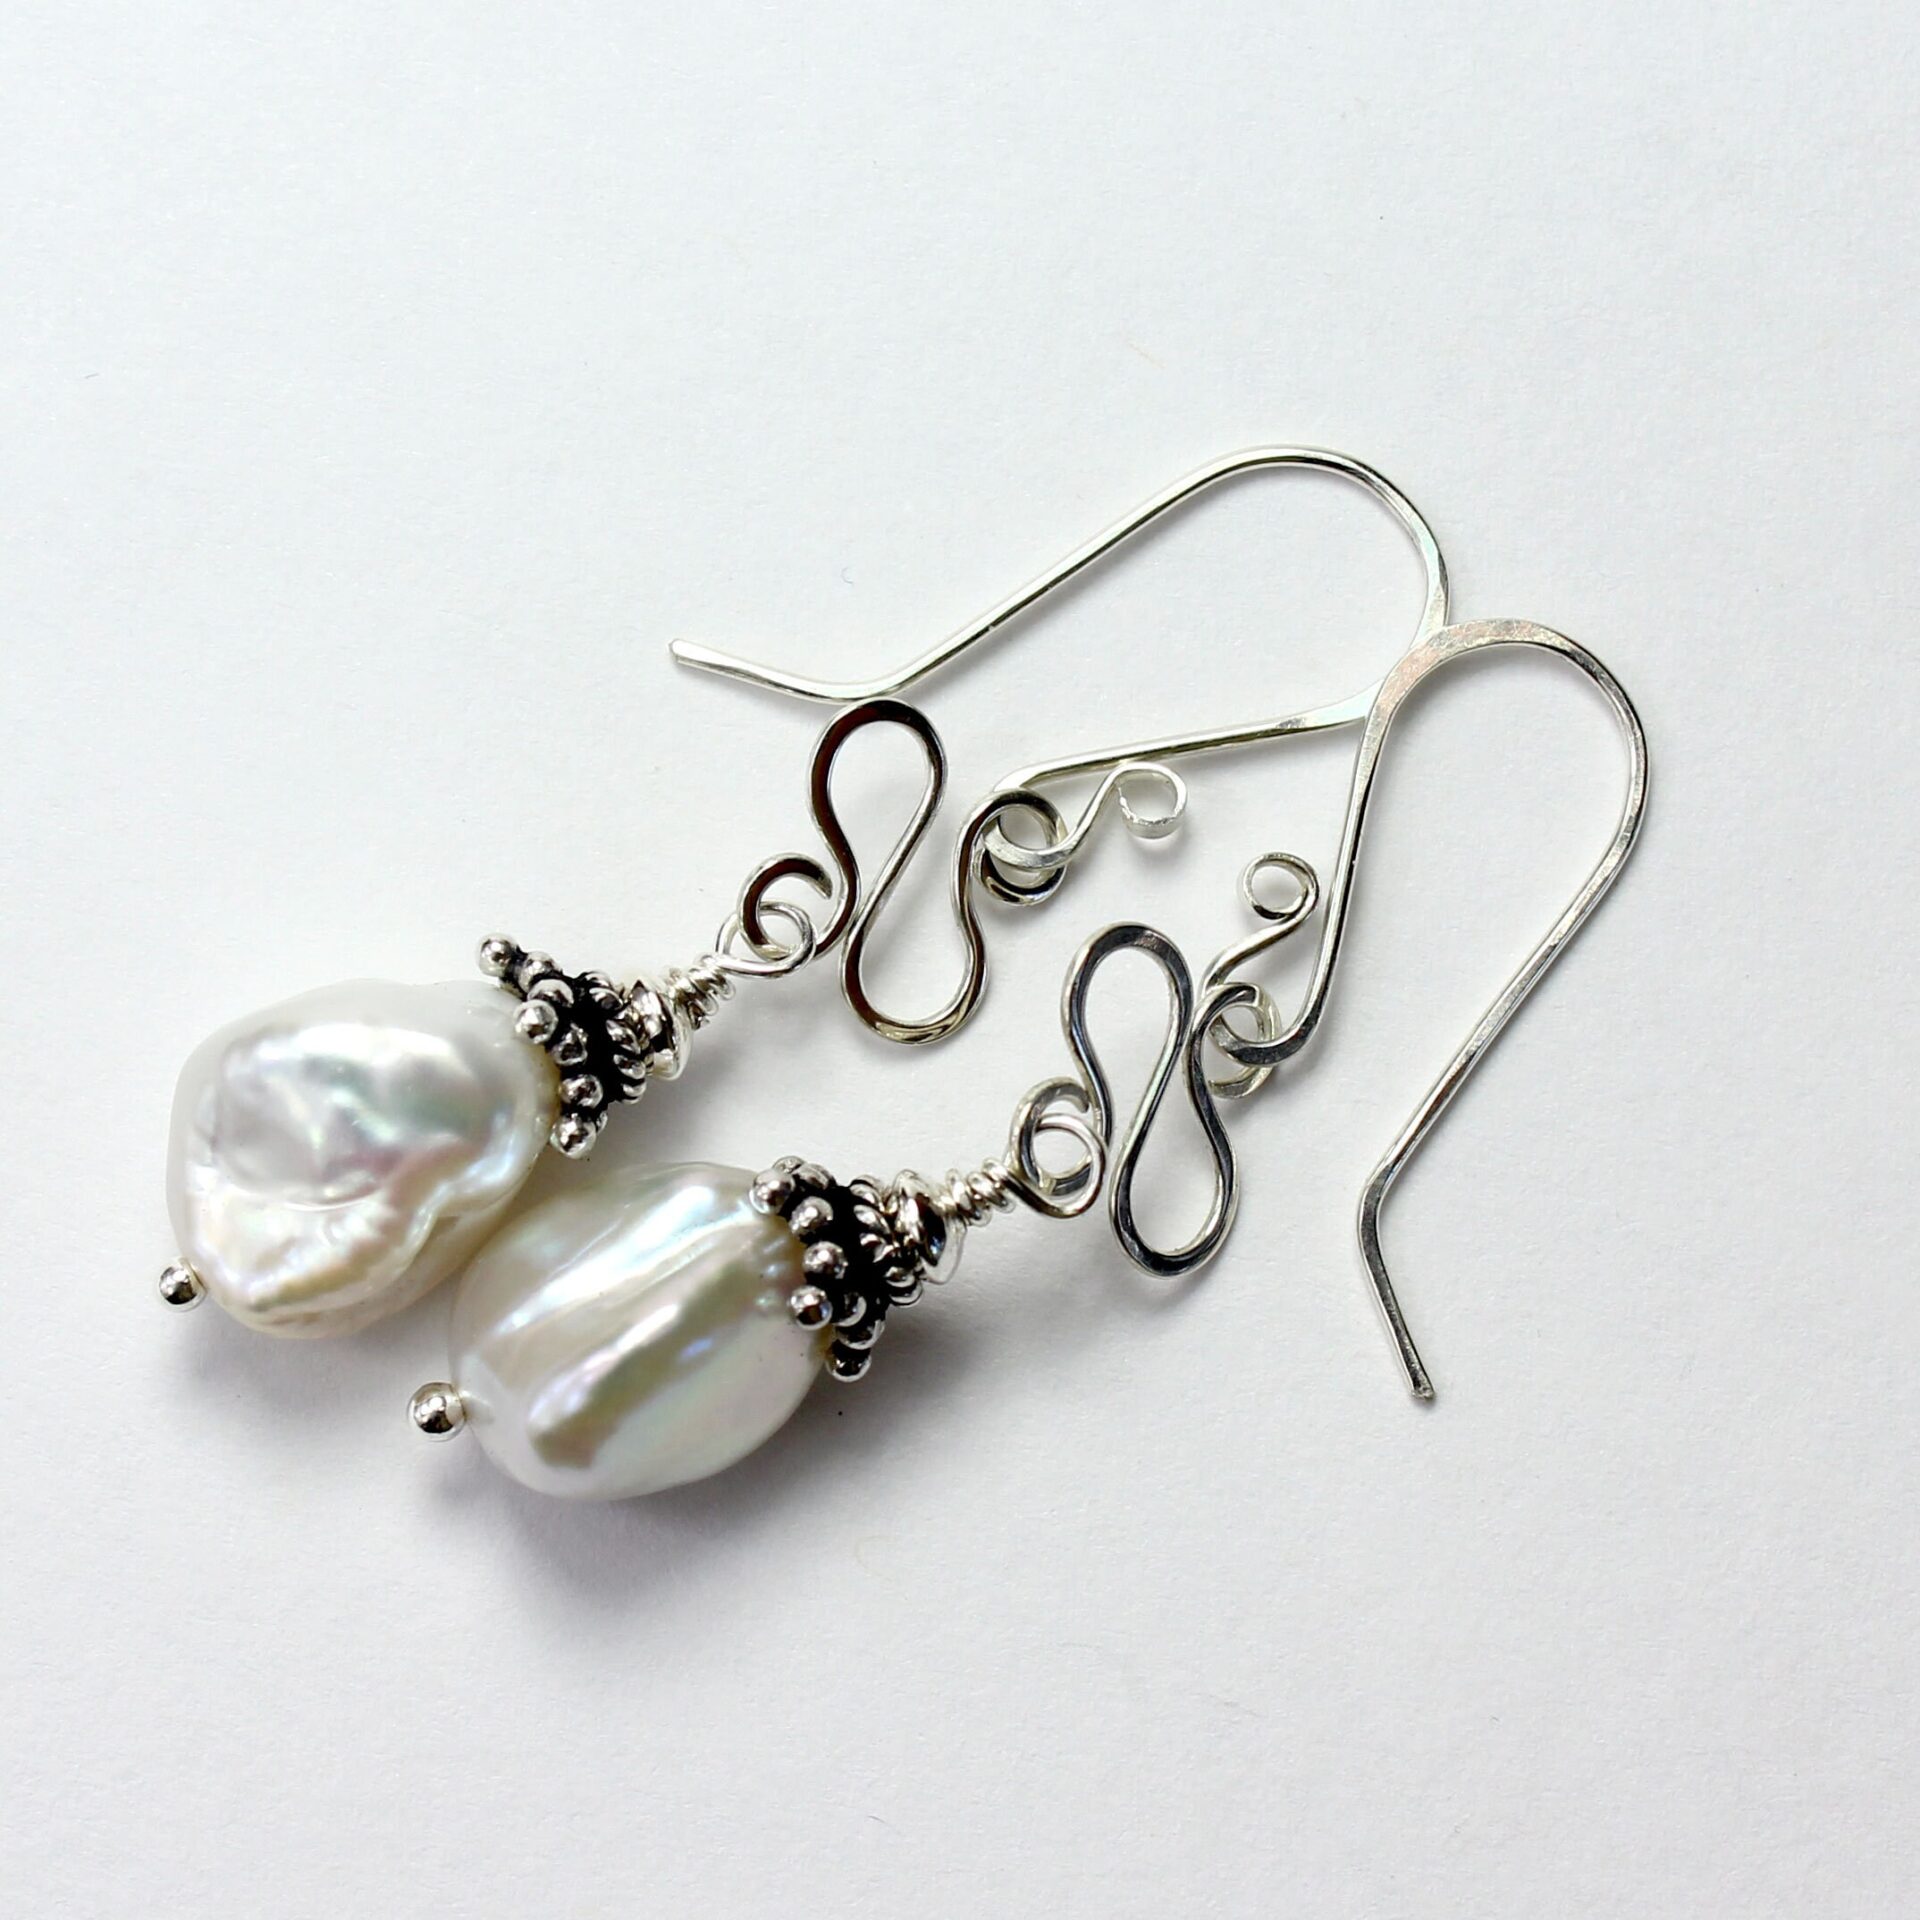 Keshi Pearls Drop from Silver Swirl Wire